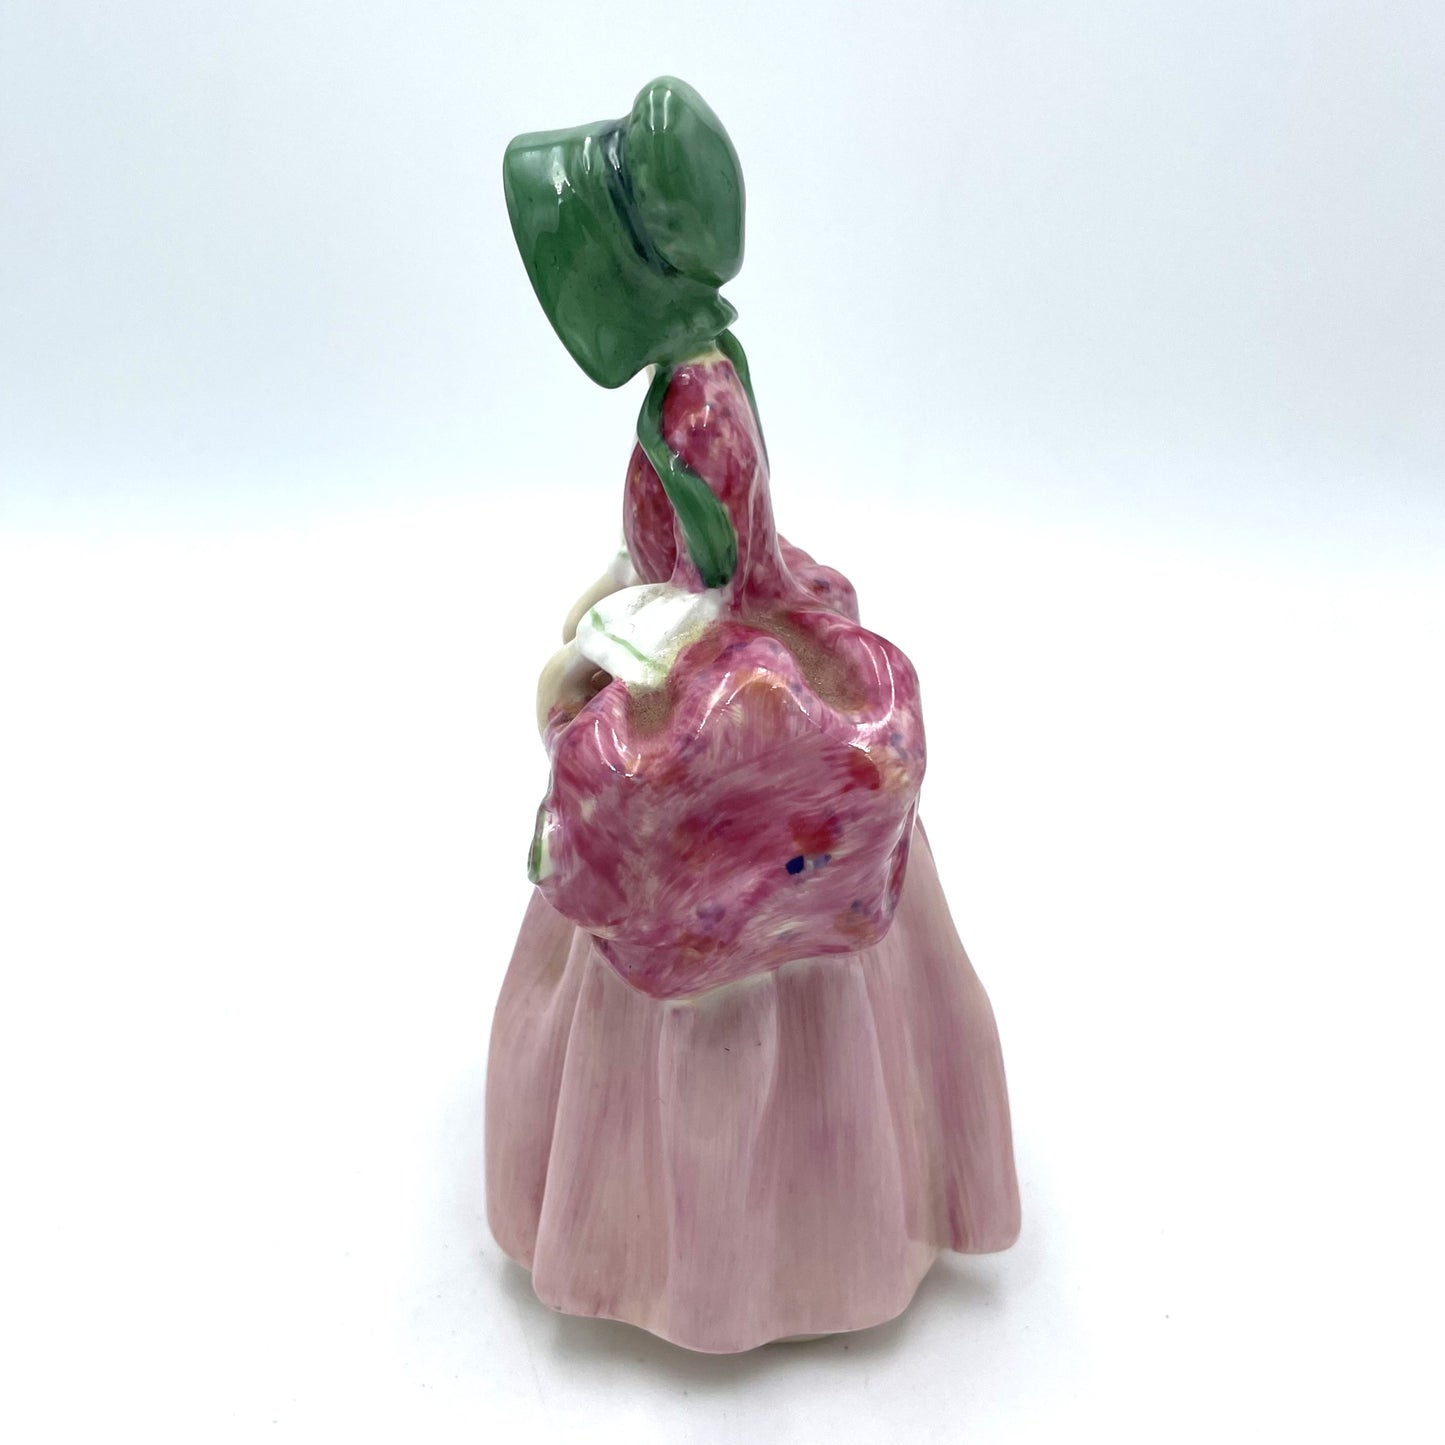 Royal Doulton "Bo Peep" Figurine - 13cm